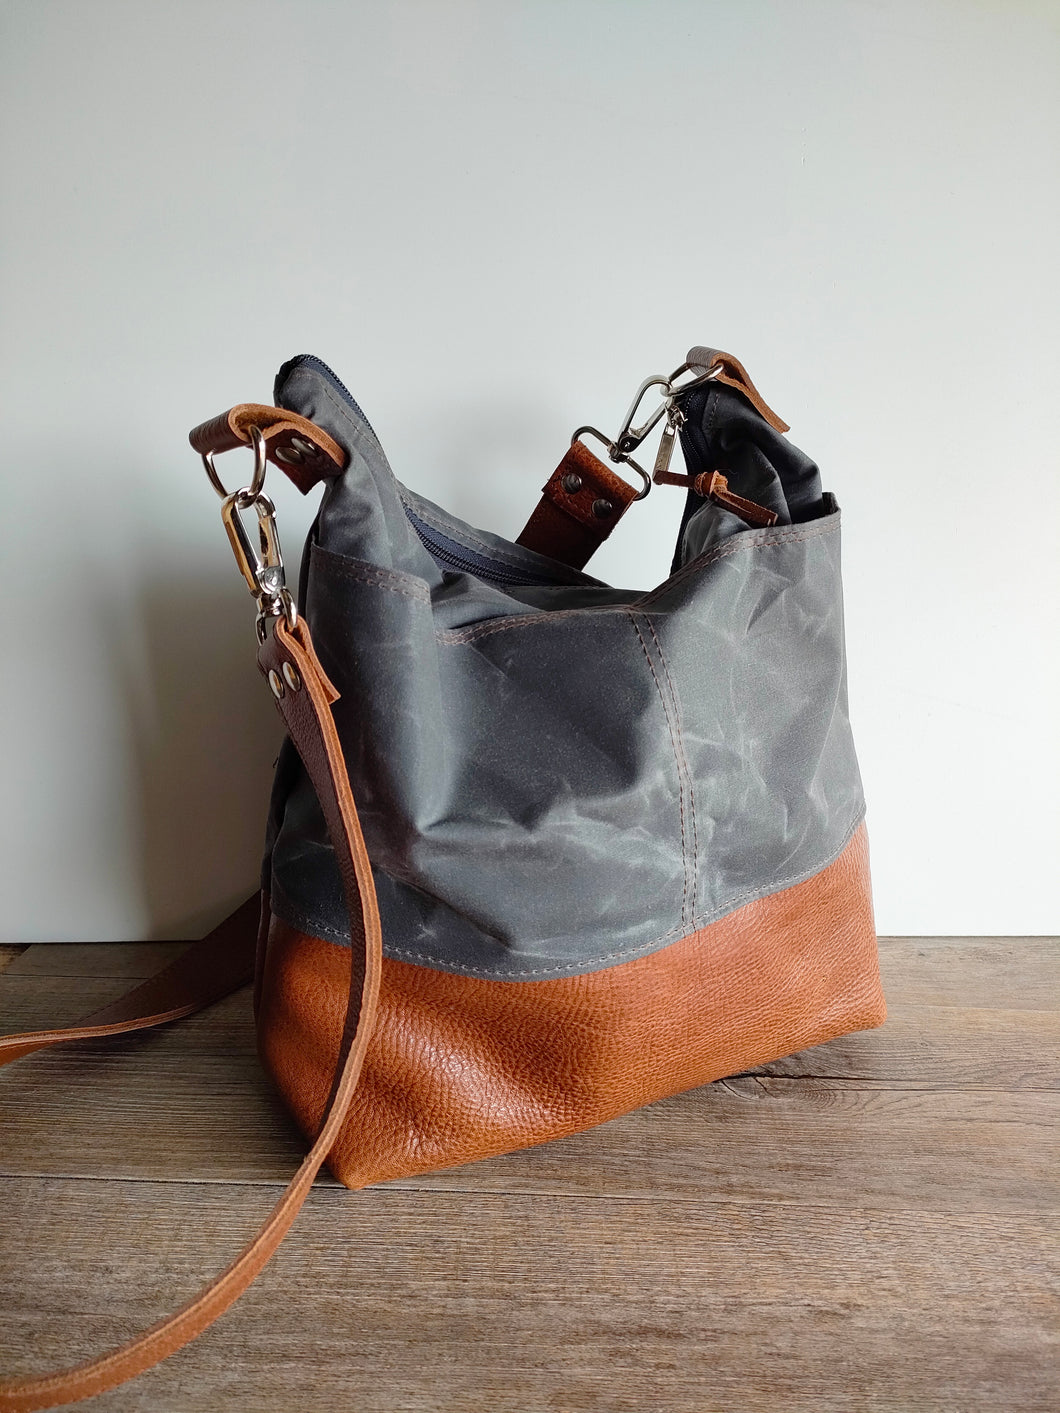 Canvas Crossbody Bag,large Capacity Hobo Bag Canvas Shoulder Bag